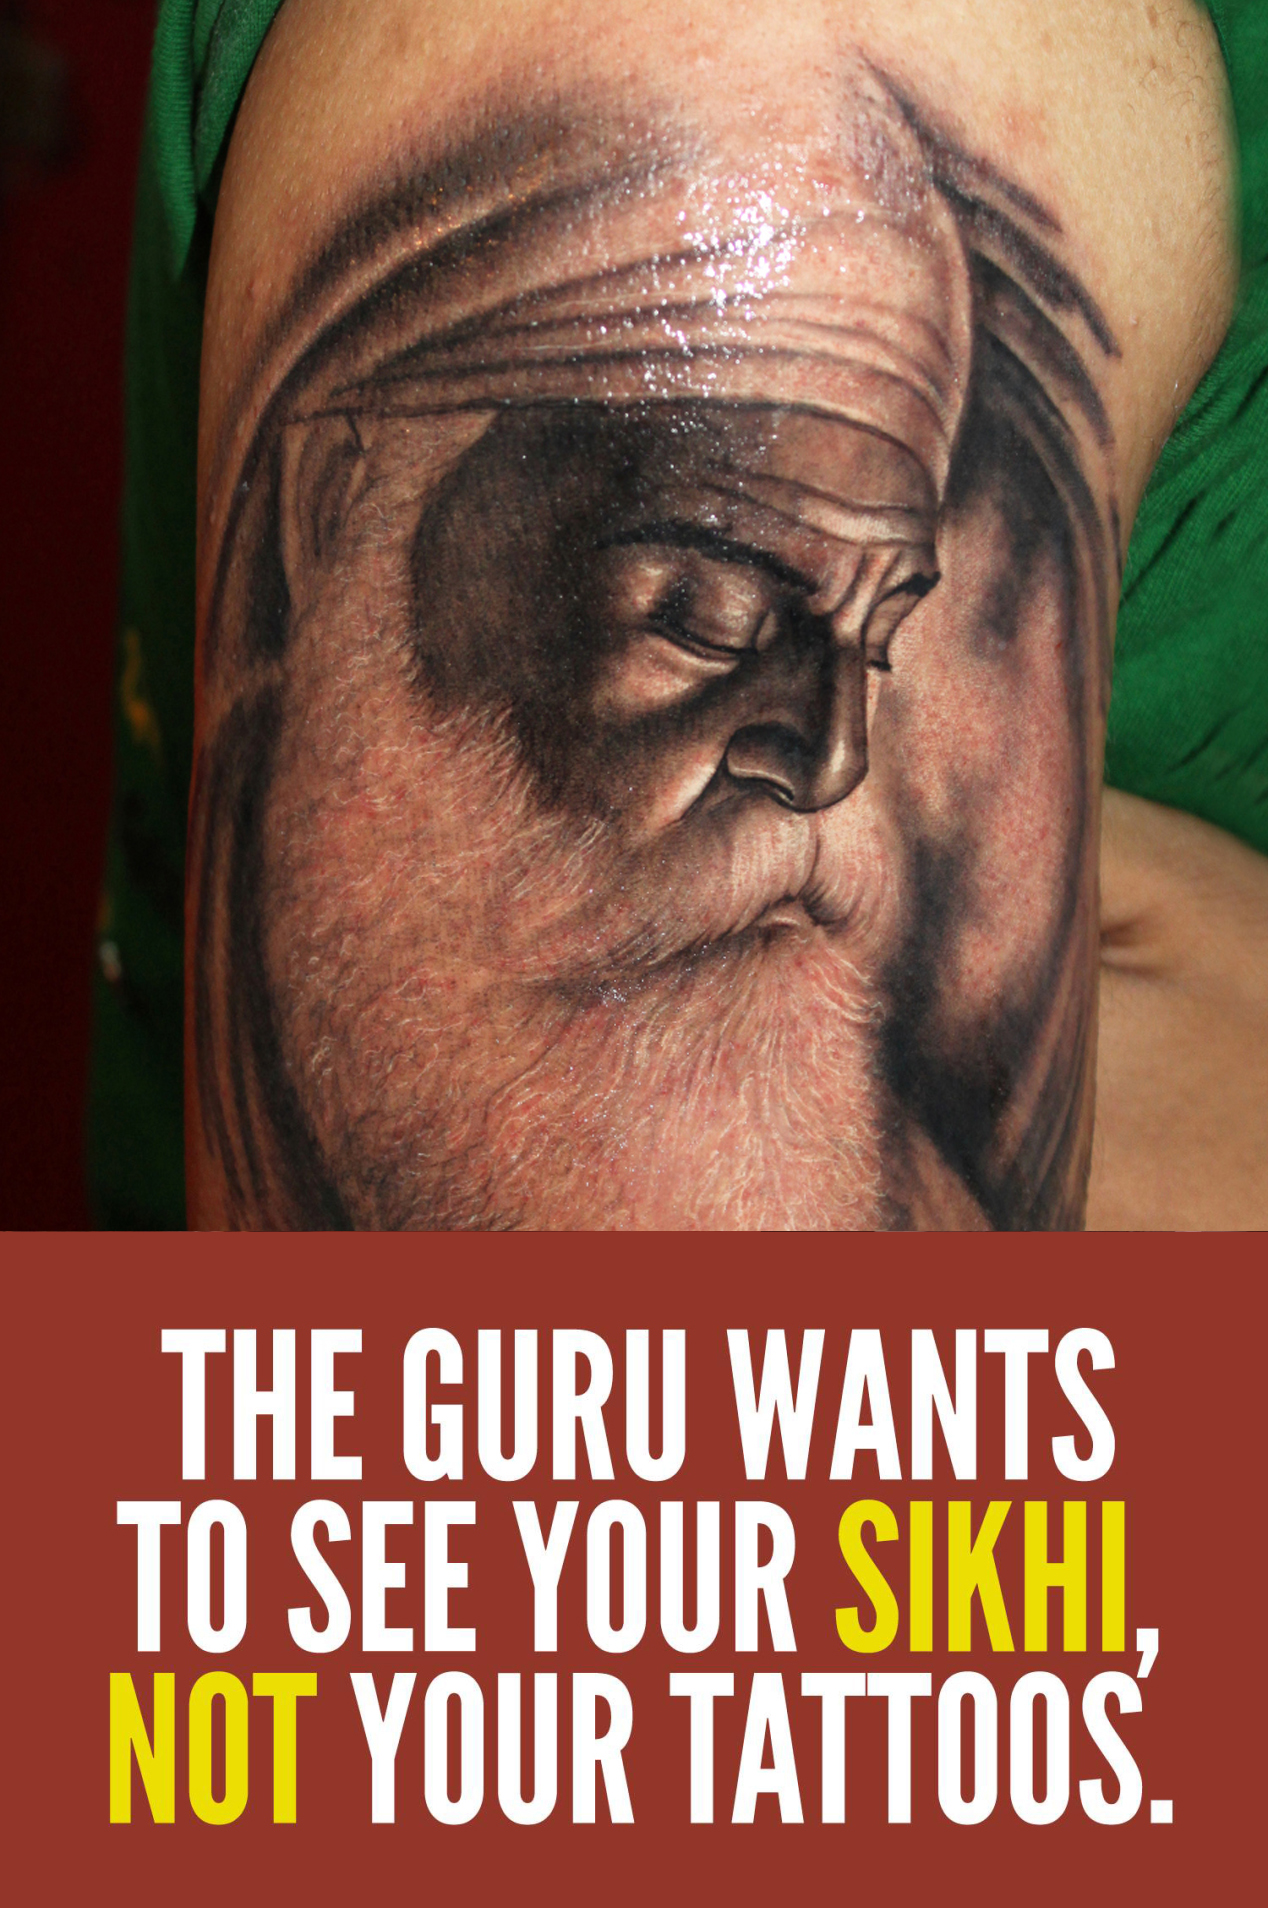 Sikh Tattoo by Dj Niks by djniks07 on DeviantArt